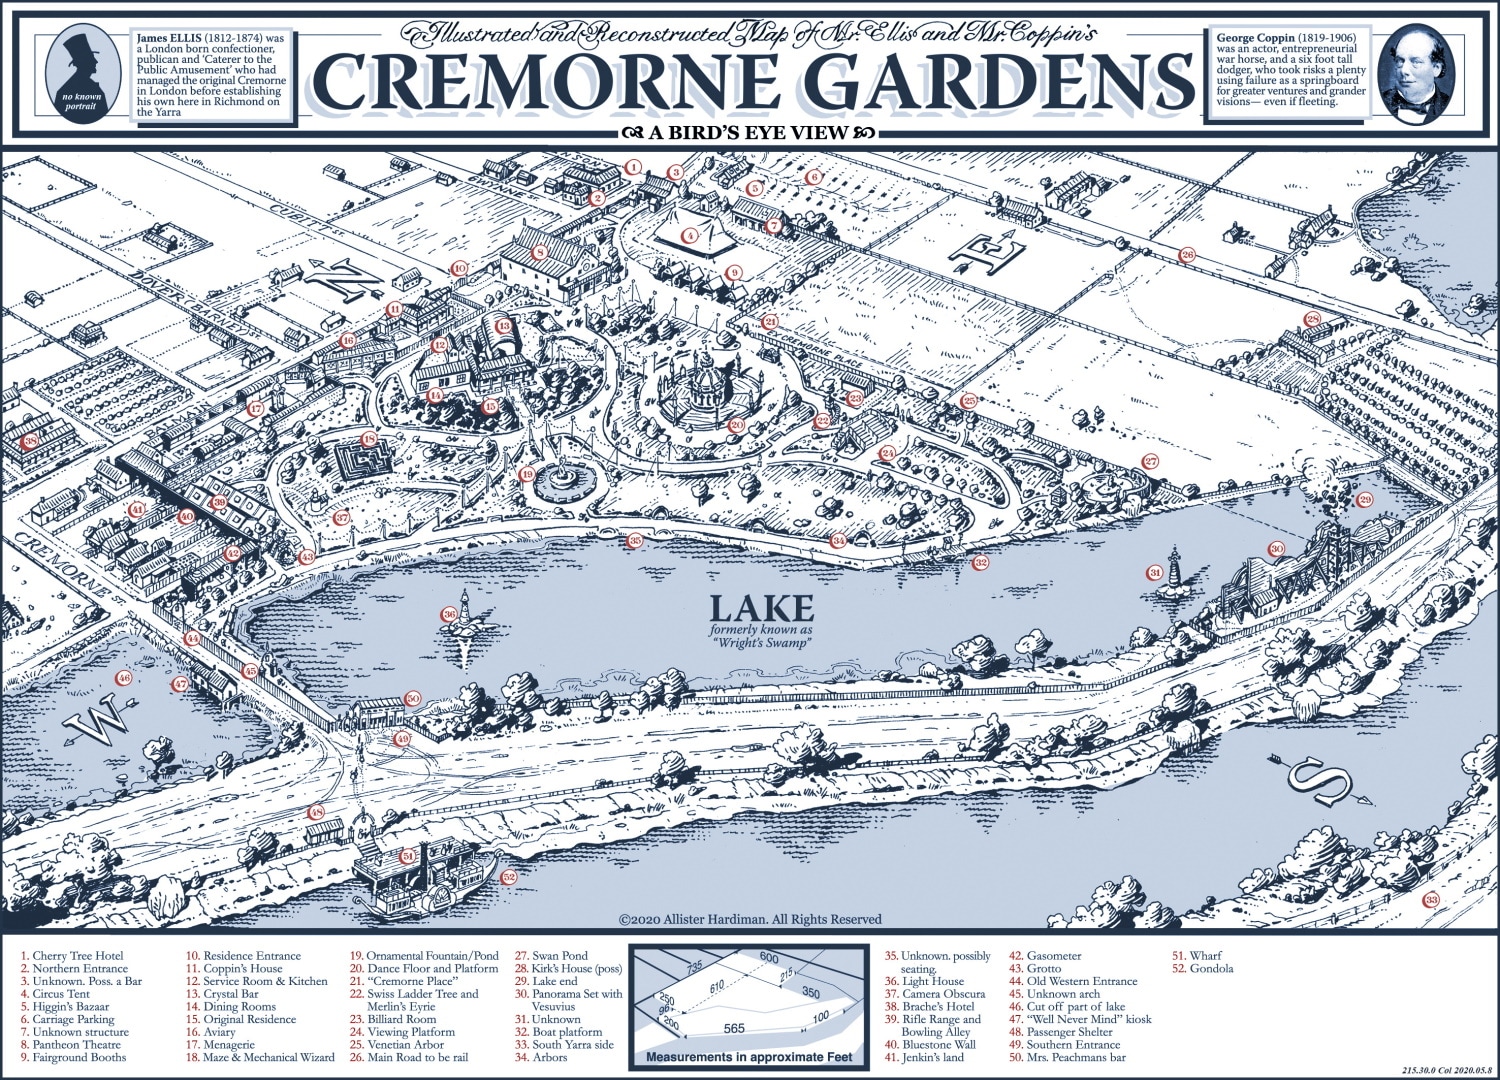 Cremorne Gardens (reconstruction Hardiman 2020)